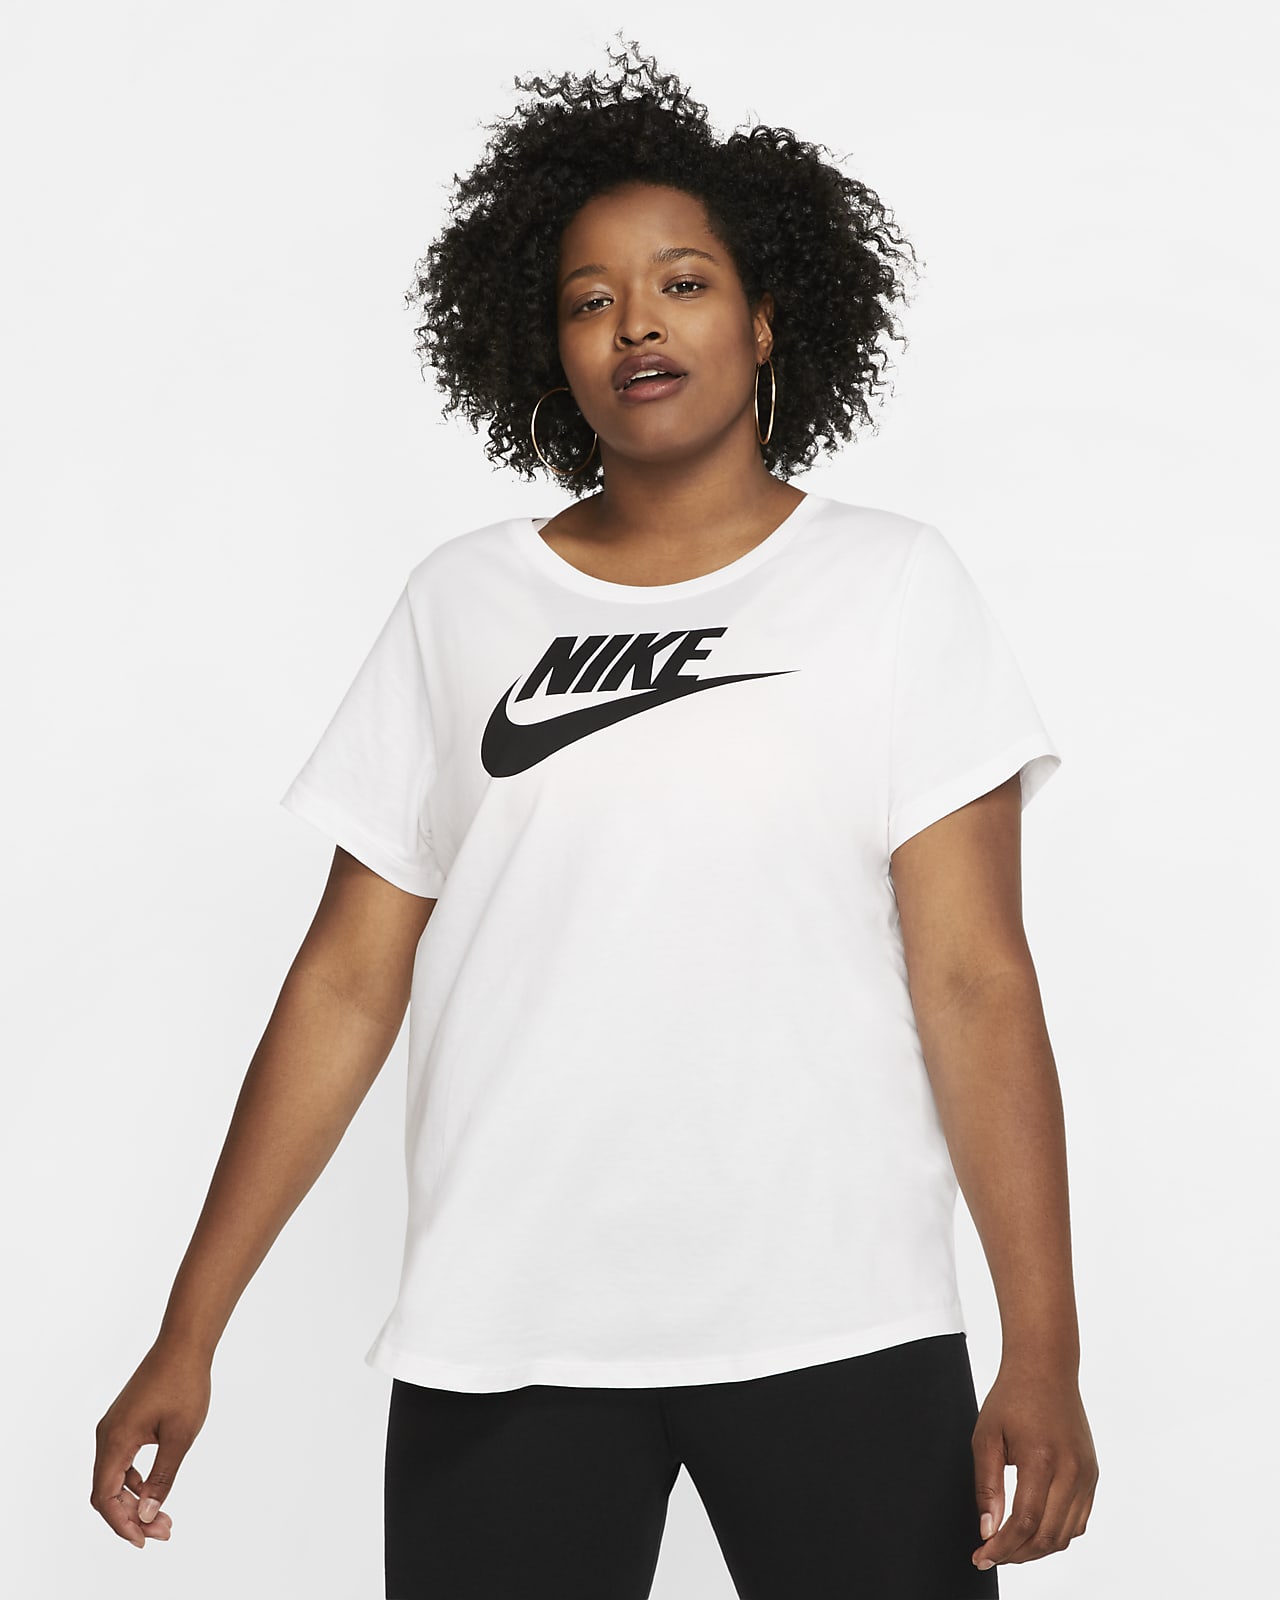 Nike Plus Size Shirts